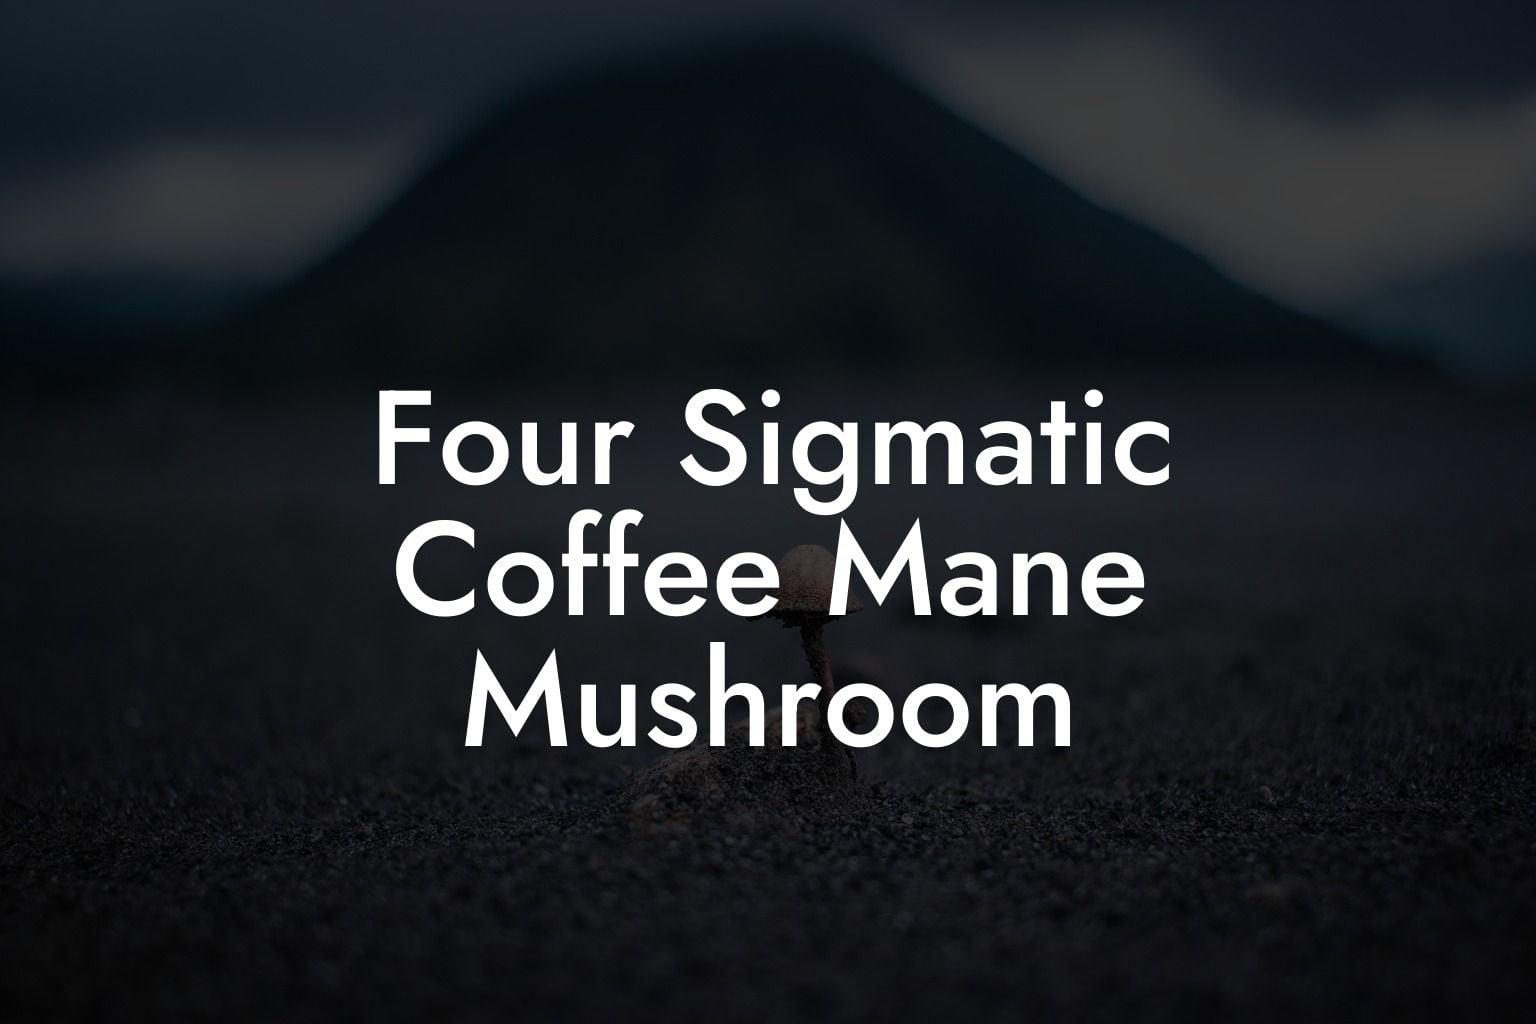 Four Sigmatic Coffee Mane Mushroom